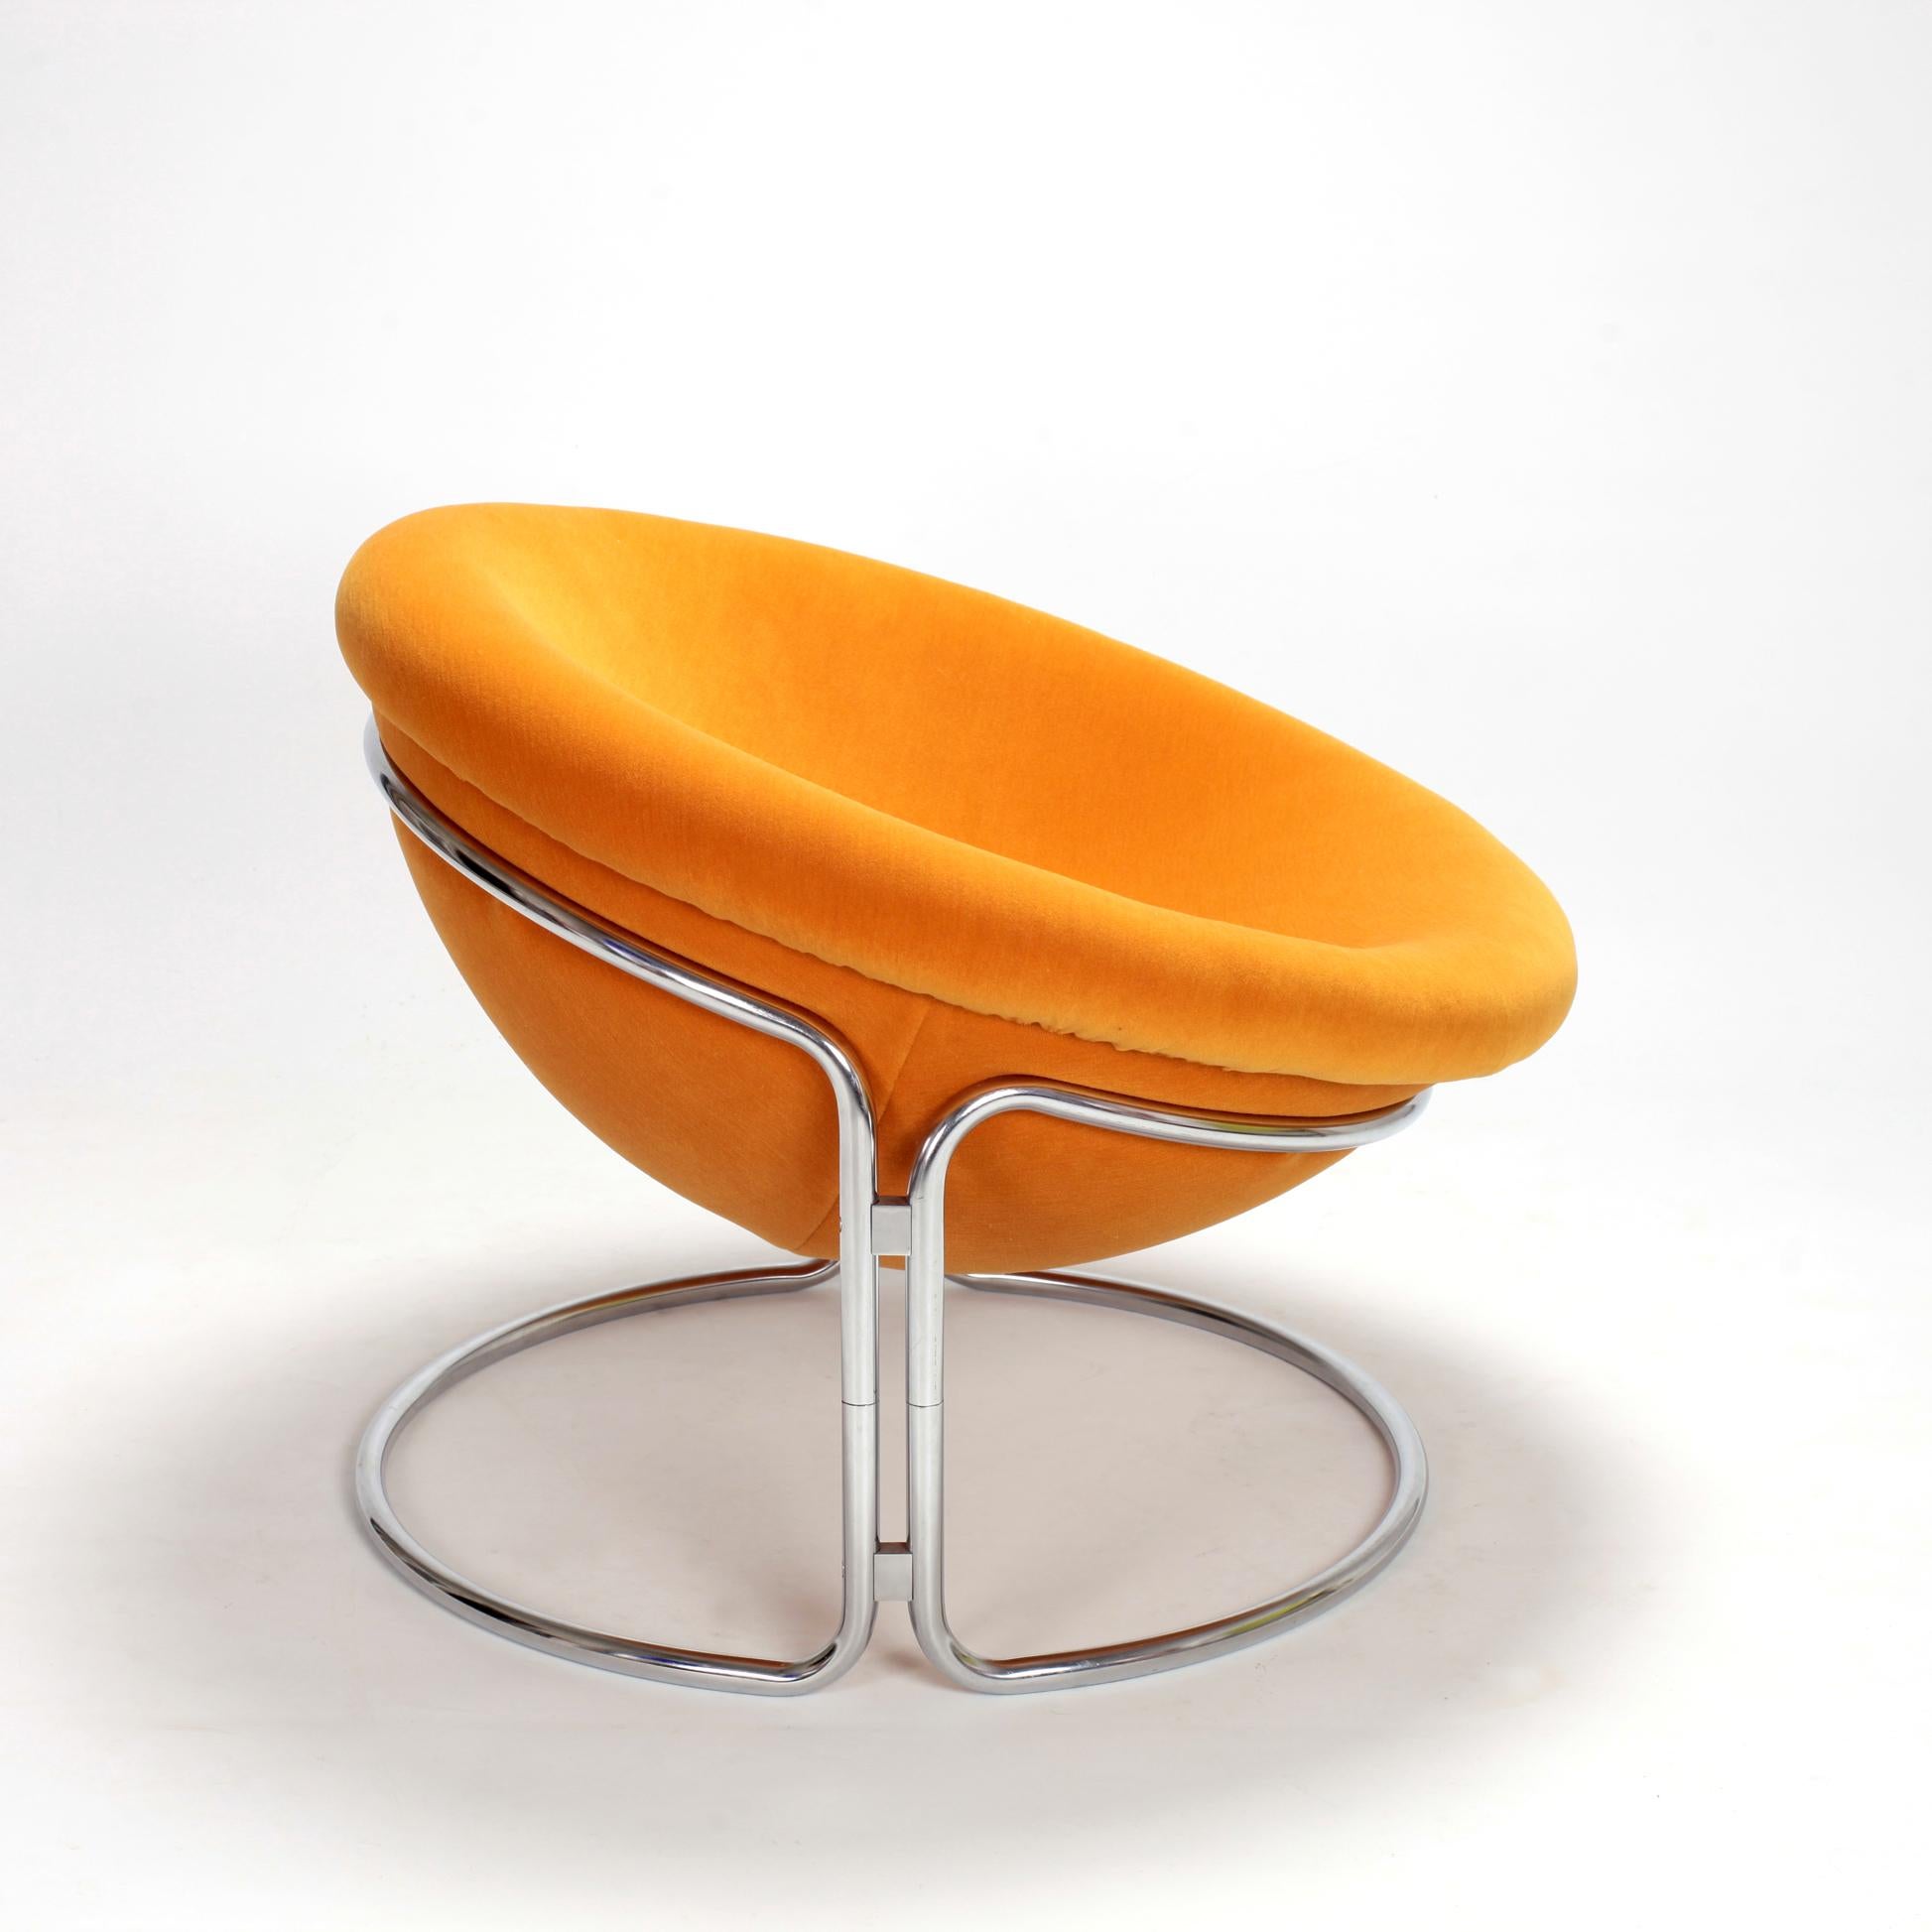 European Luigi Colani Space Age Lounge Chair, 1970